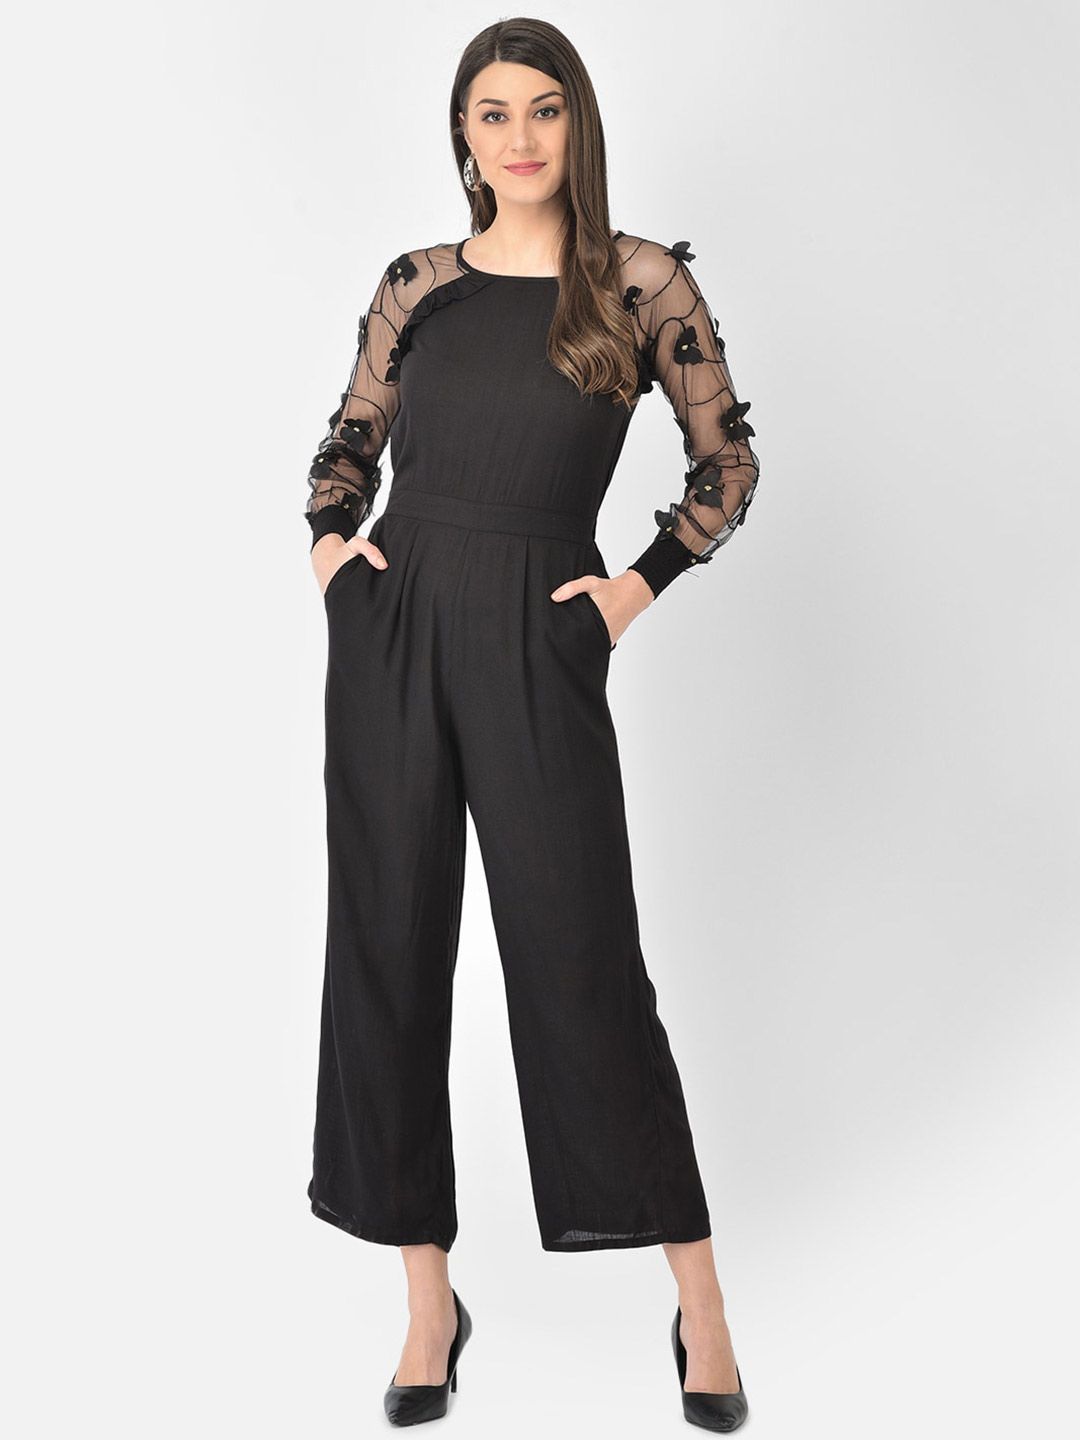 Eavan Black Embellished Basic Jumpsuit Price in India